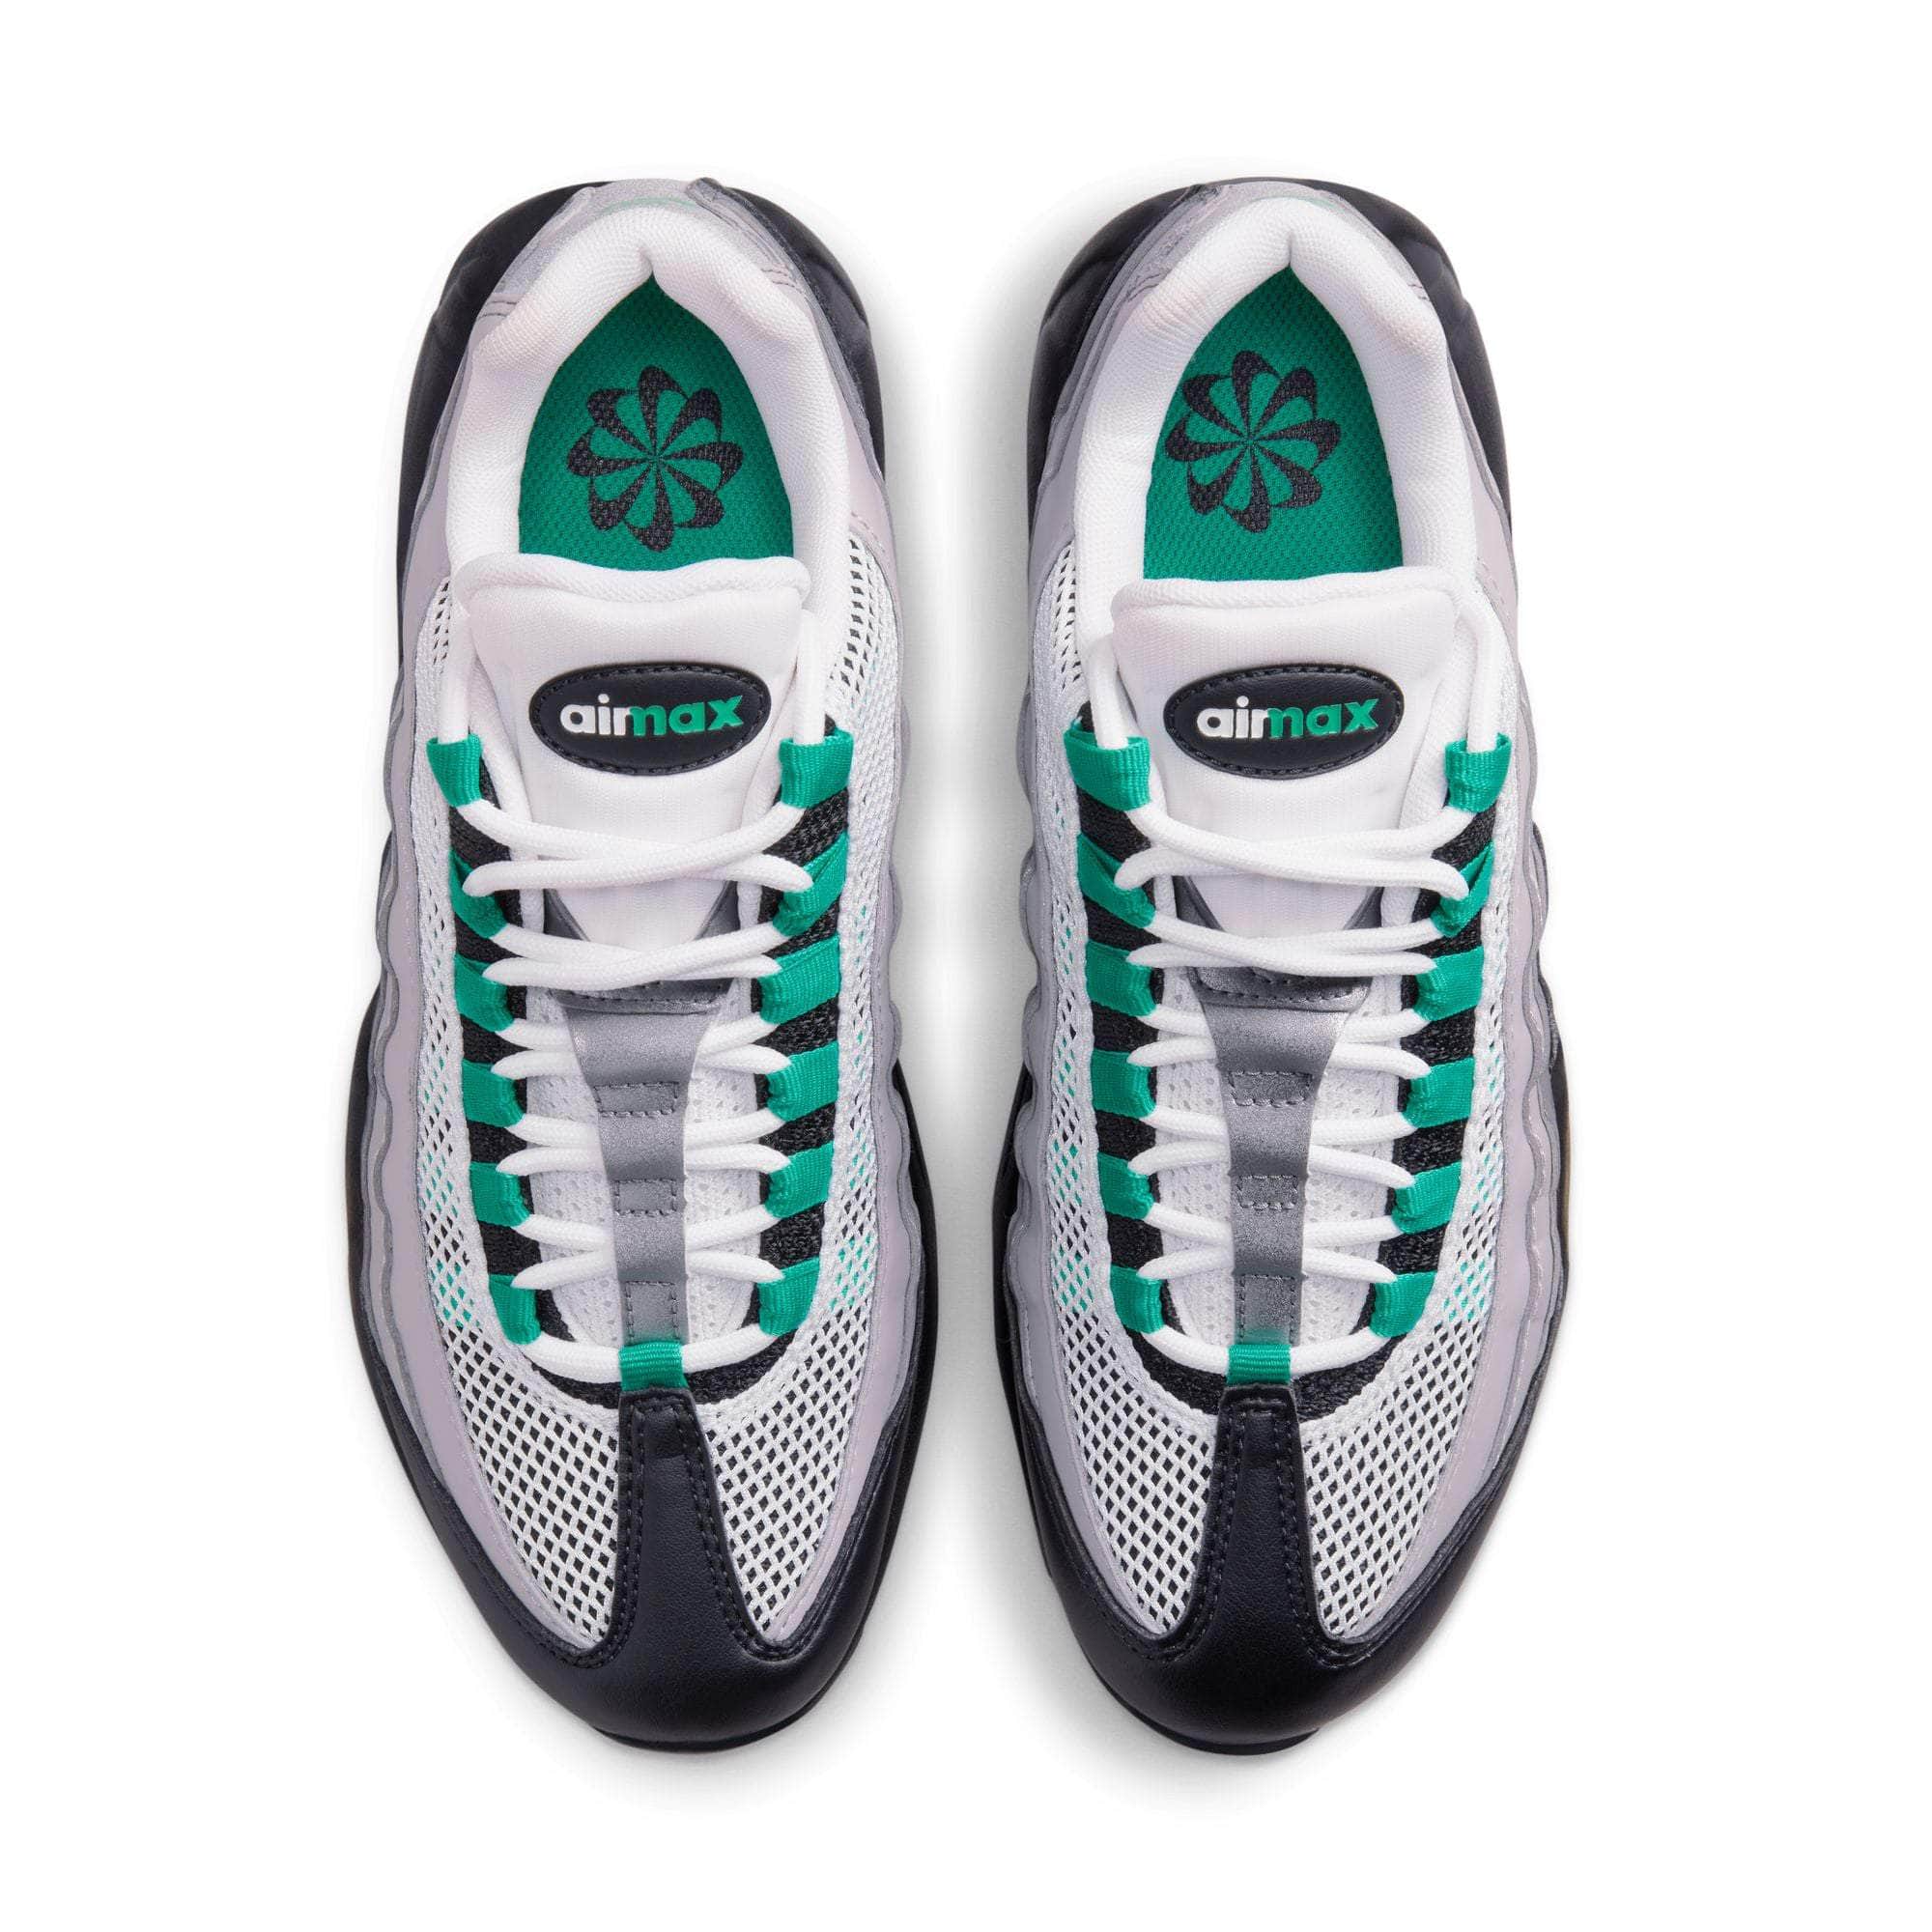 NIKE FOOTWEAR Nike Air Max 95 “Stadium Green” - Women's